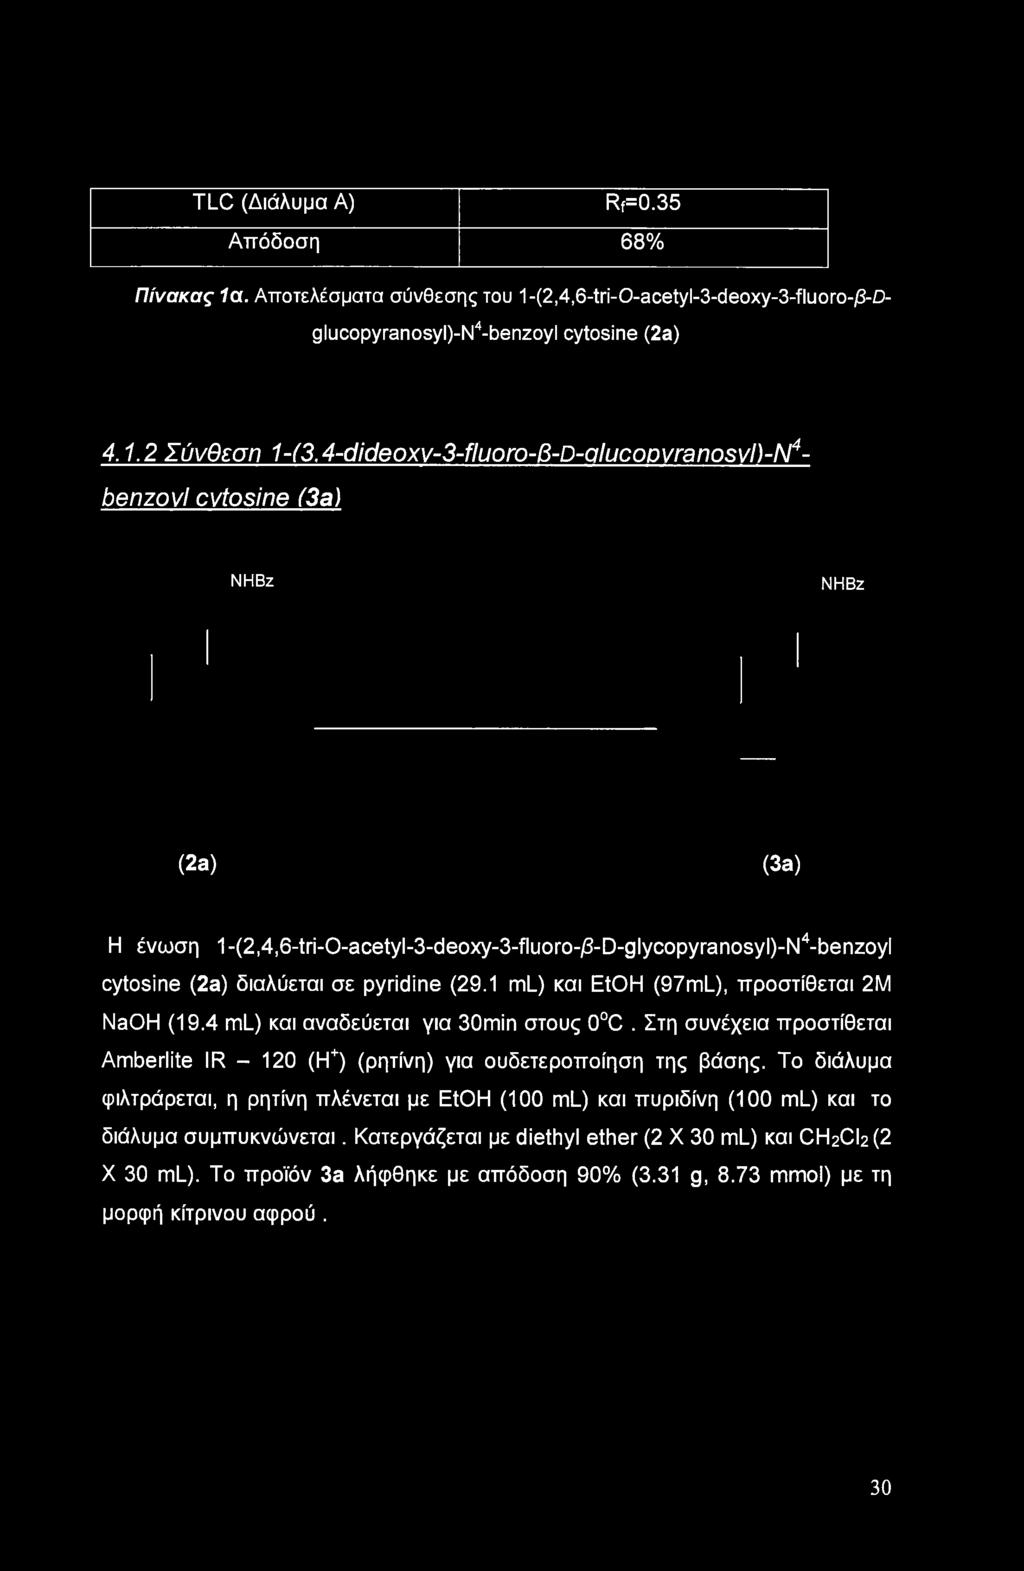 pyridine (29.1 ml) και EtOH (97mL), προστίθεται 2M NaOH (19.4 ml) και αναδεύεται για 30min στους 0 C. Στη συνέχεια προστίθεται Amberlite IR - 120 (Η+) (ρητίνη) για ουδετεροποίηση της βάσης.